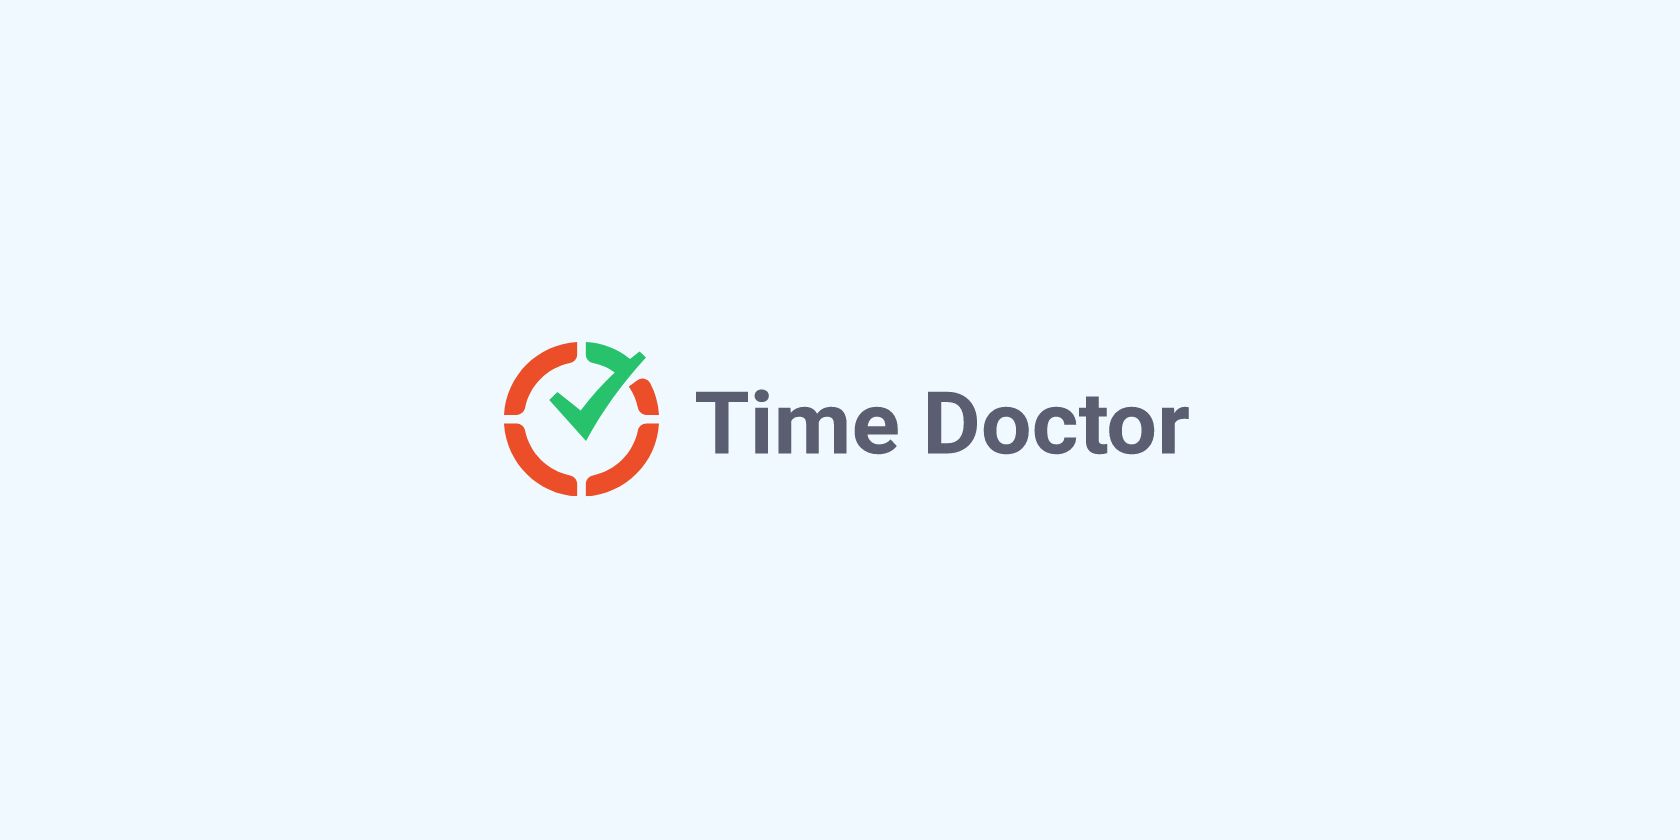 time doctor app logo on bluish background